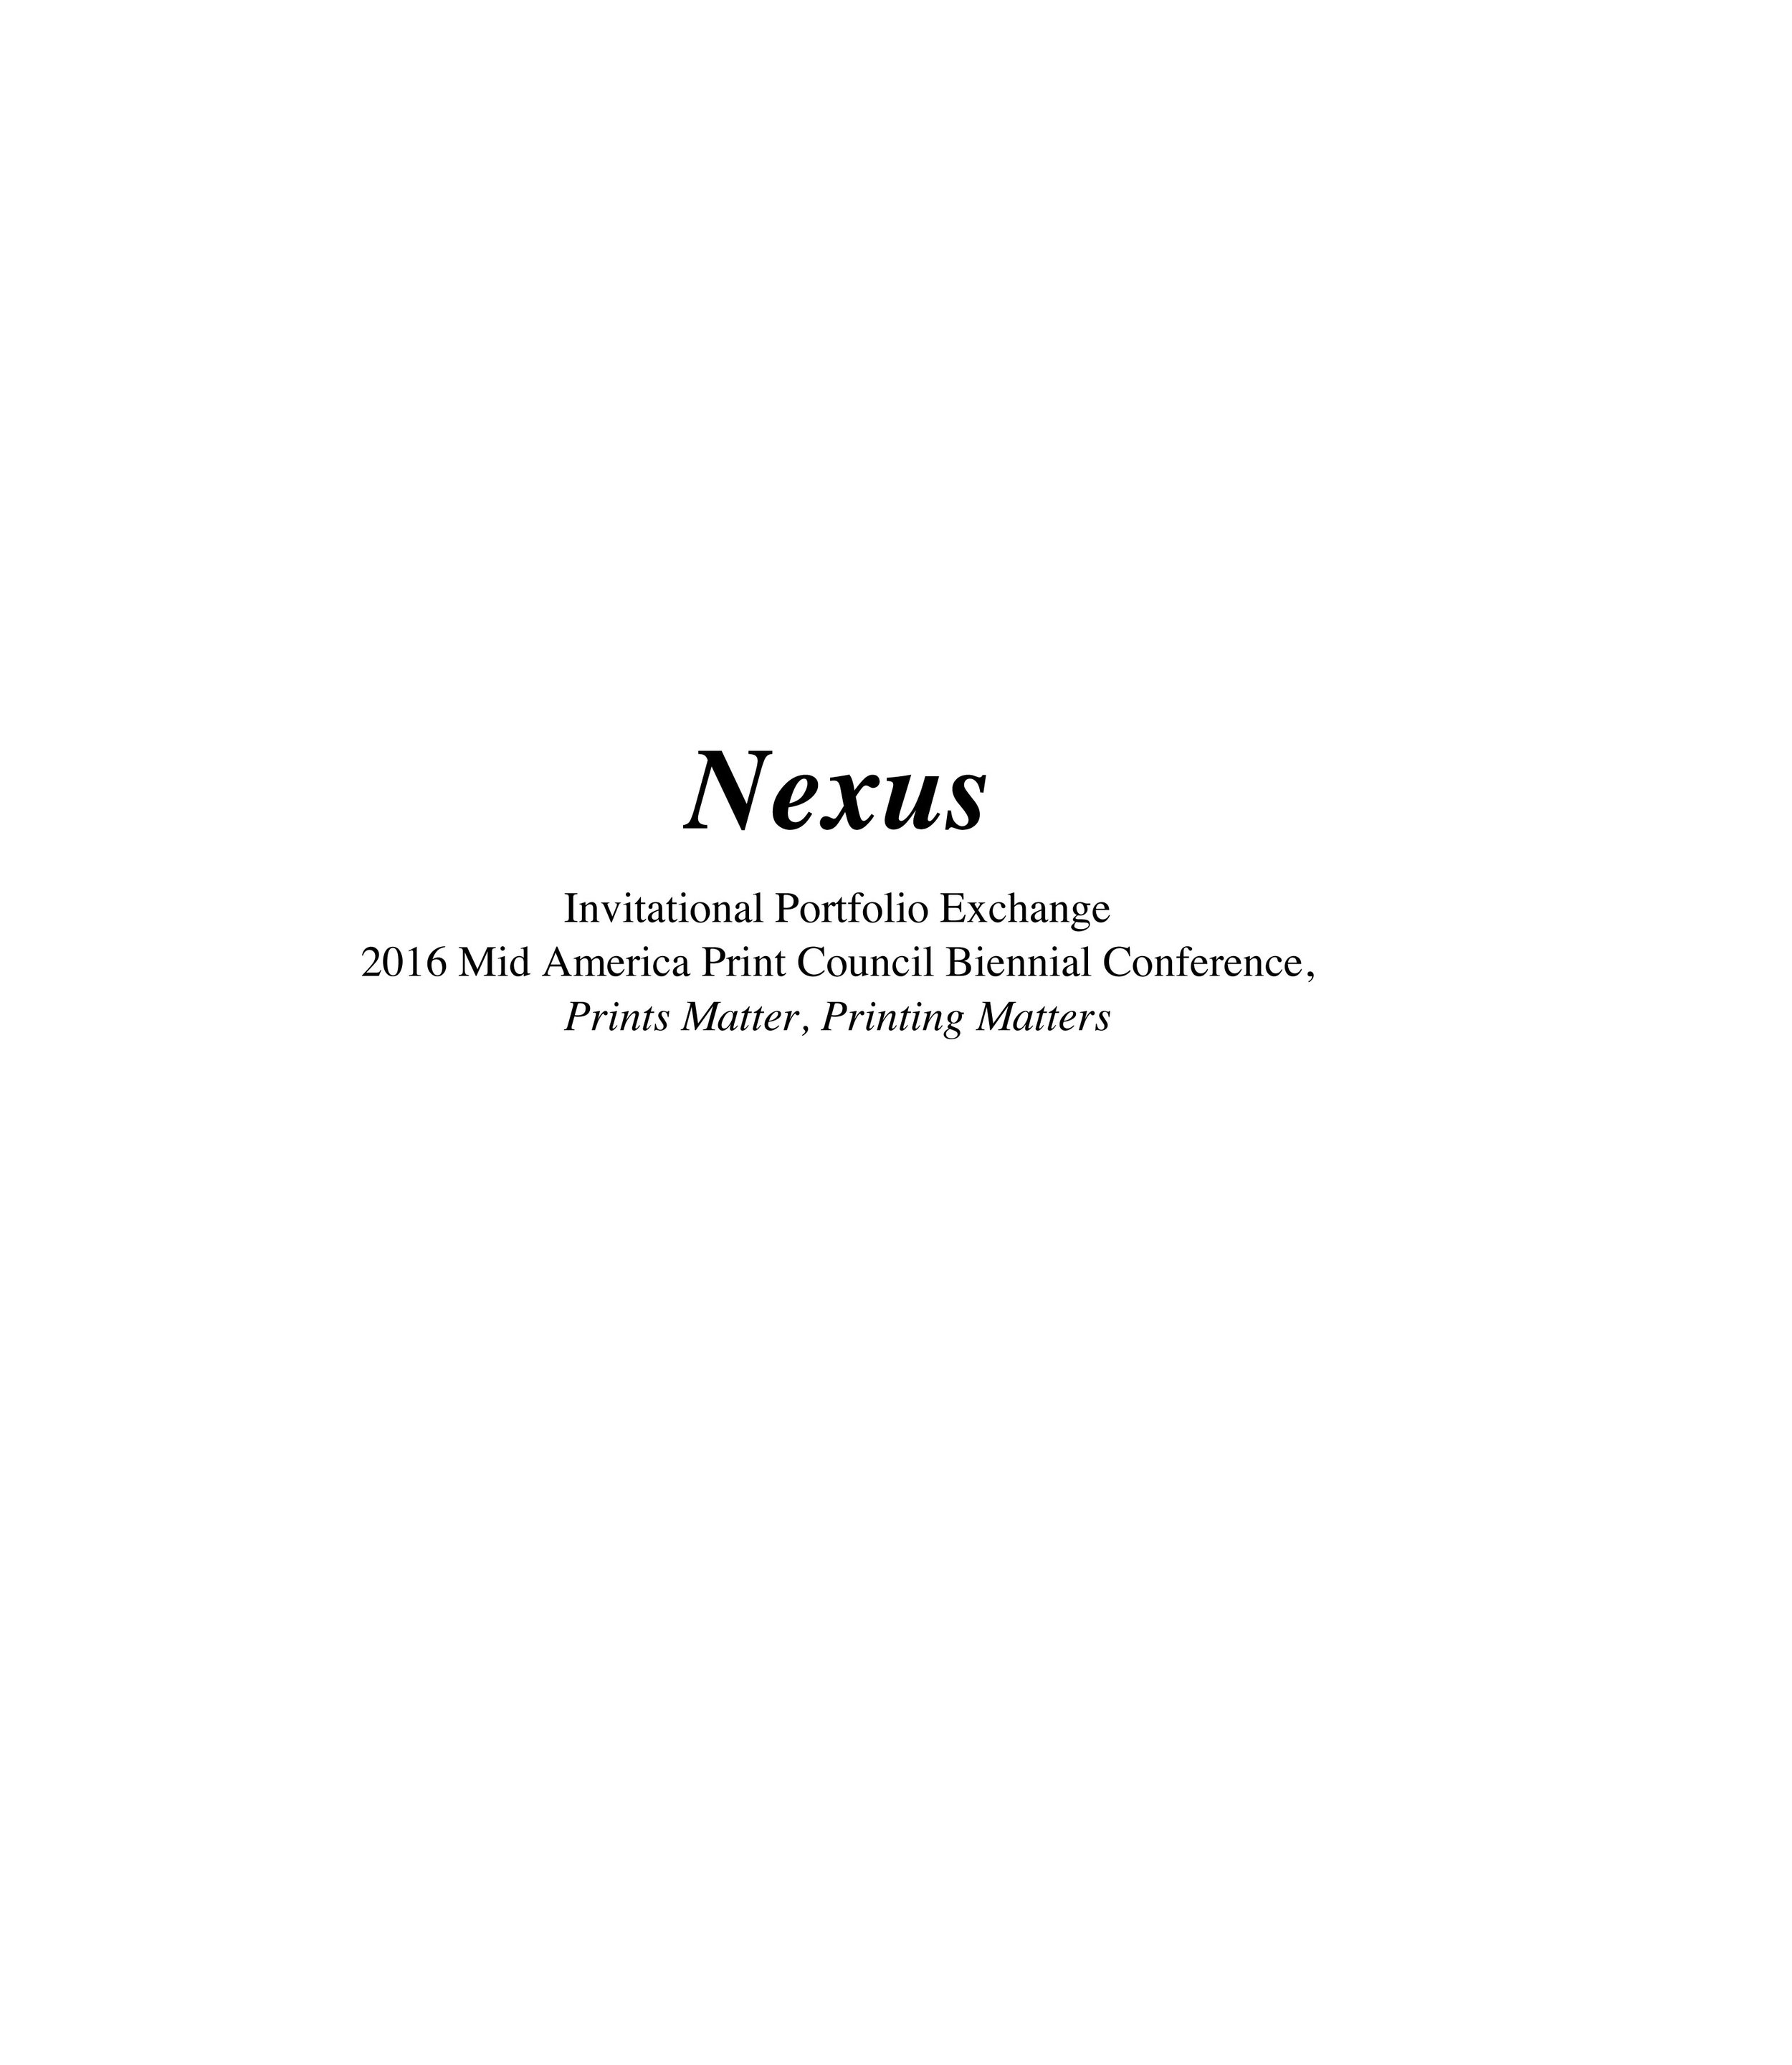 Nexus Title Page_Final.jpg